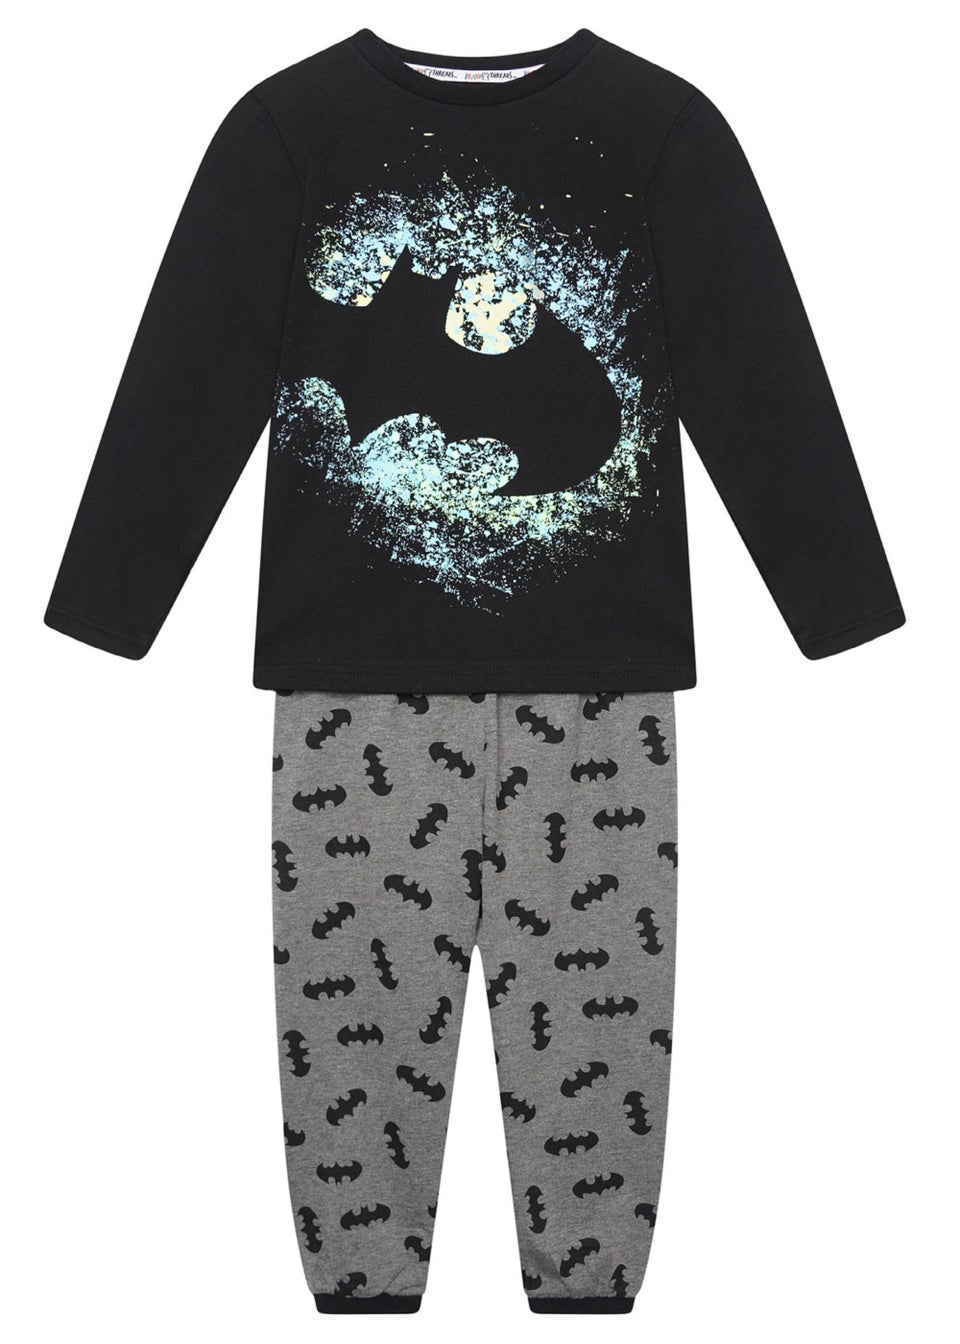 Brand Threads Kids' Batman Pyjamas